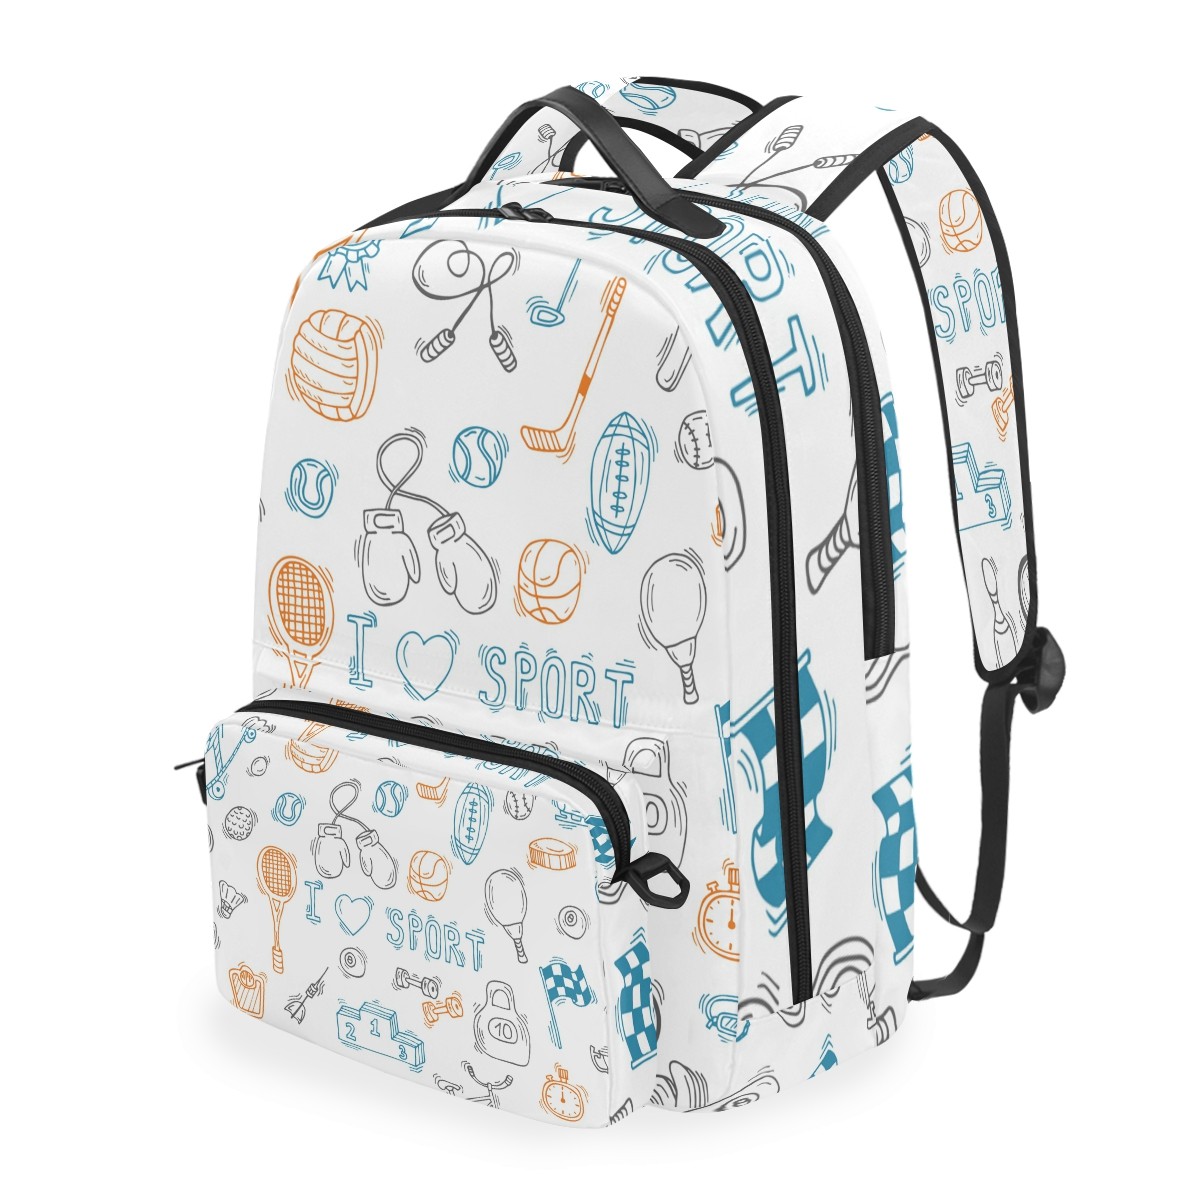 Detachable School Backpack